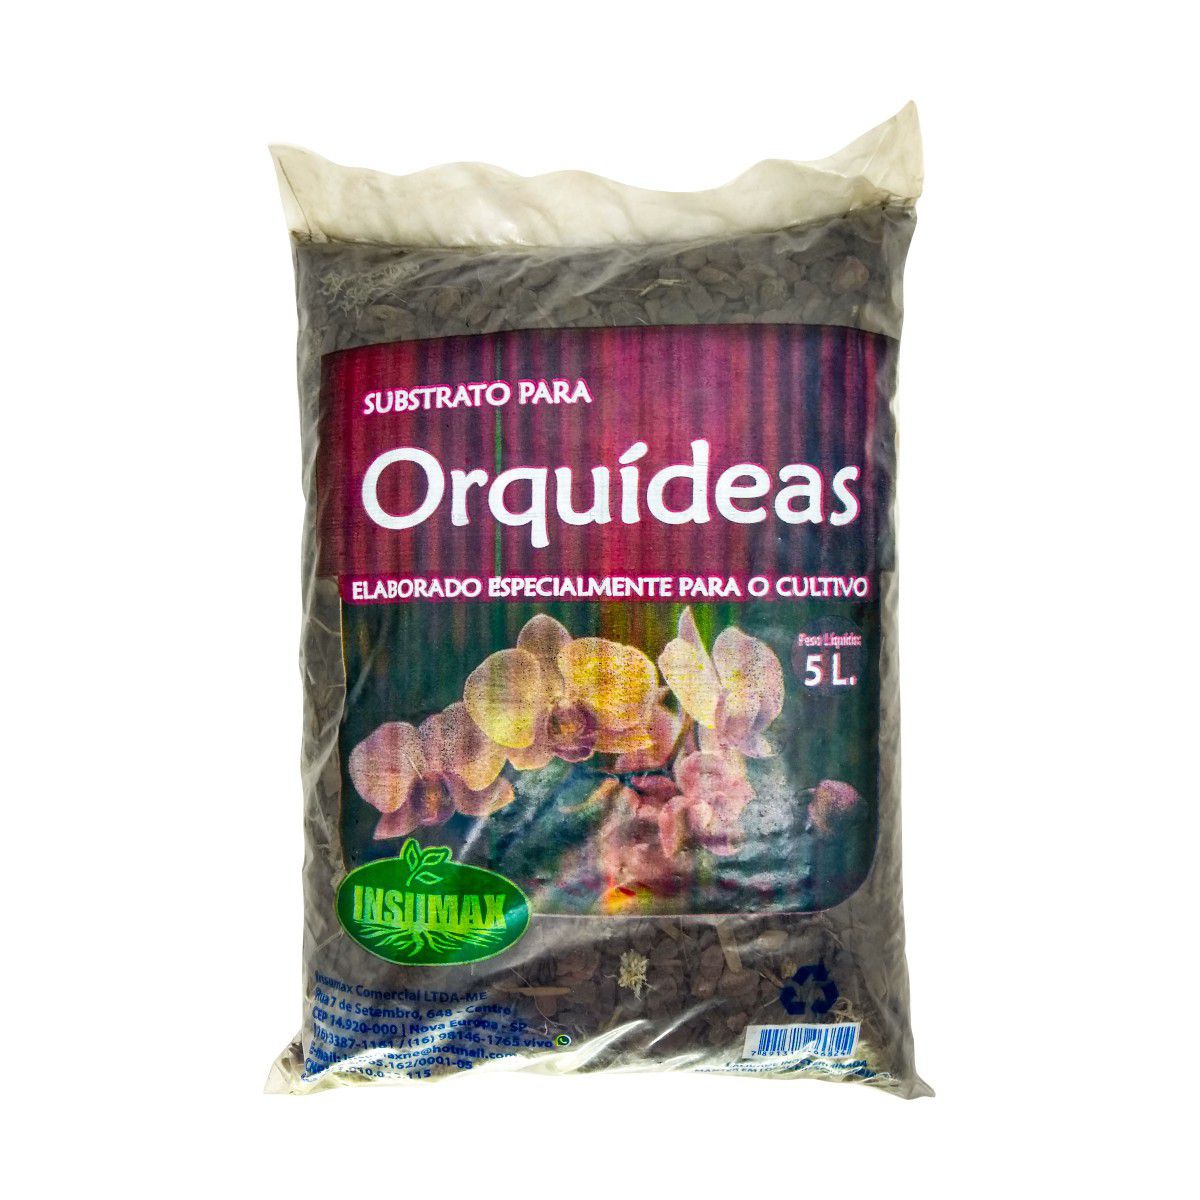 Substrato para Orquídeas 5 litros Especial para Cultivo - Foto 0